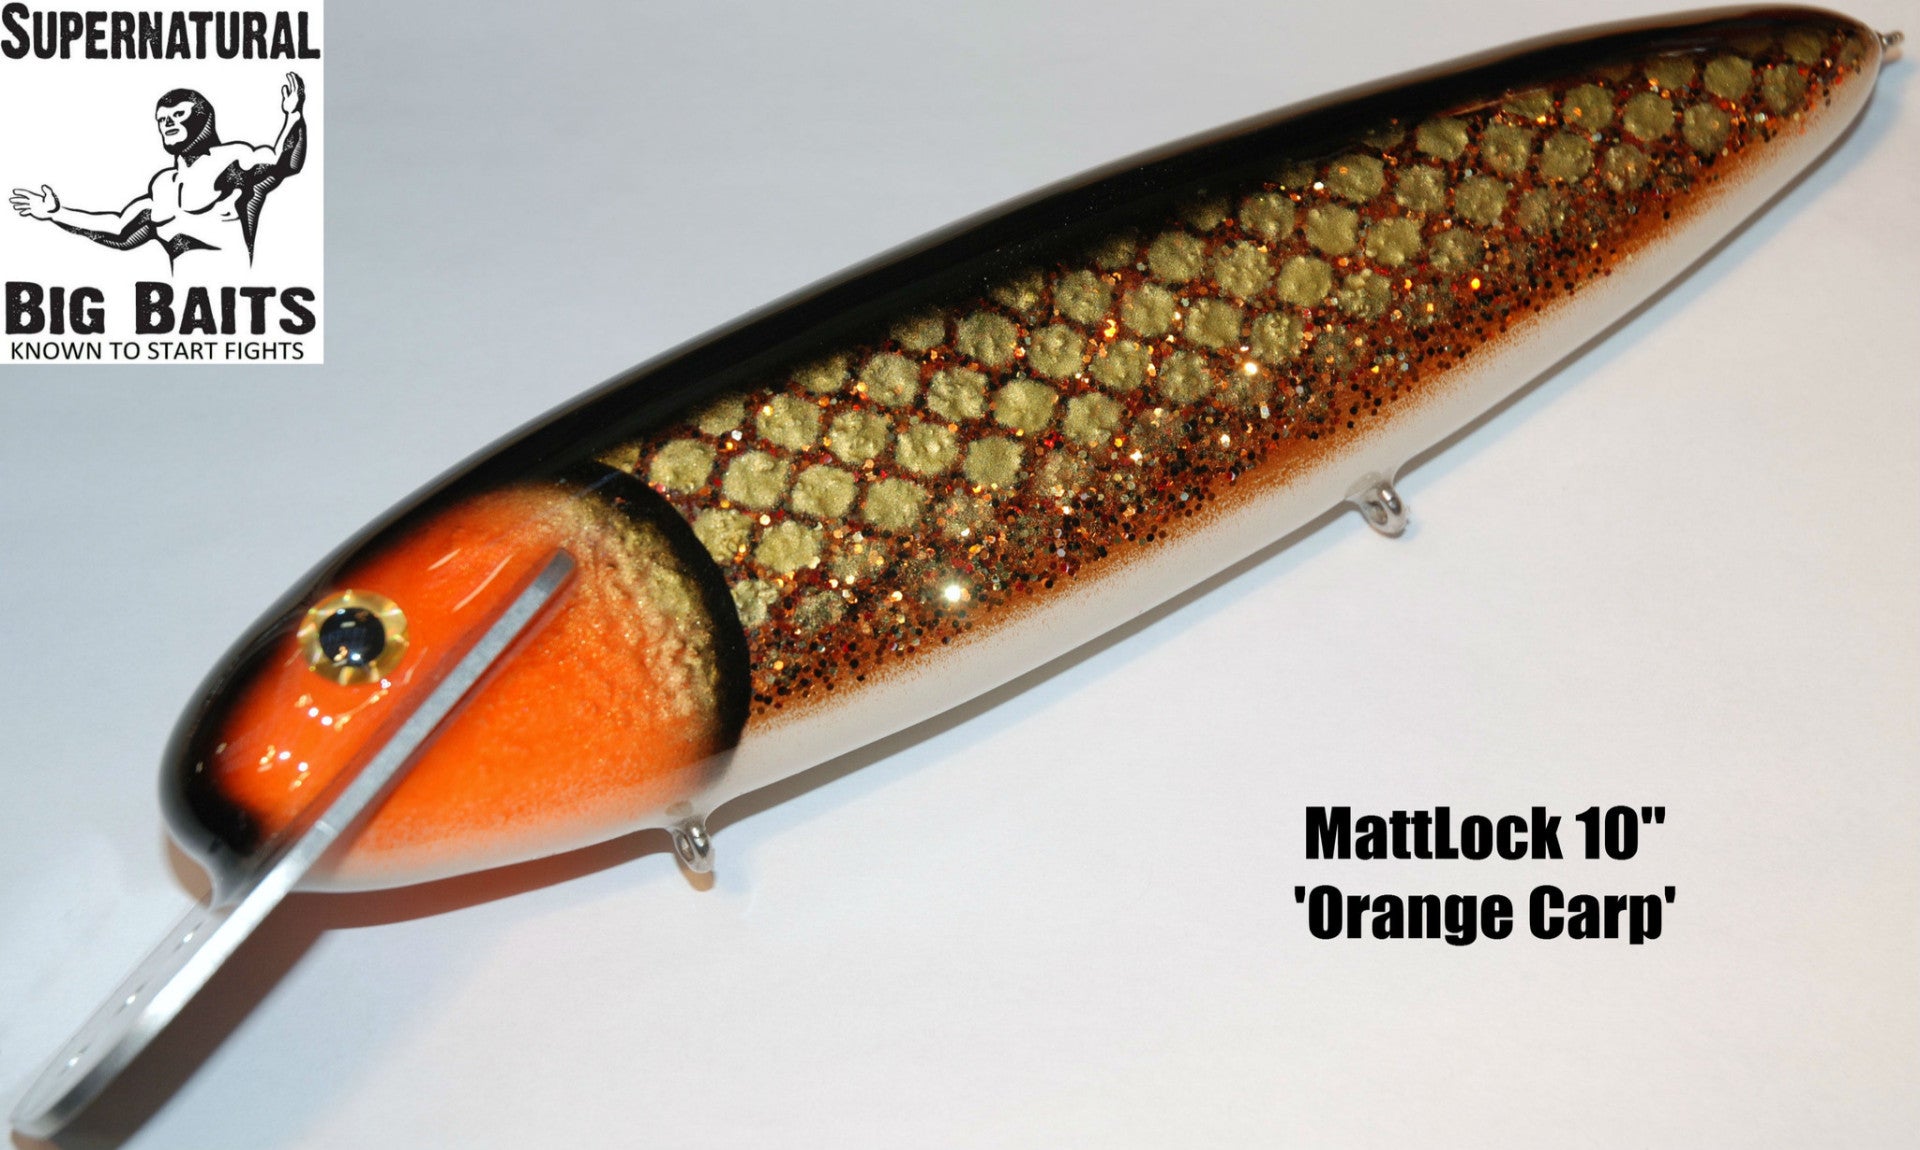 MattLock 10 Standard Orange Carp – Supernatural Big Baits